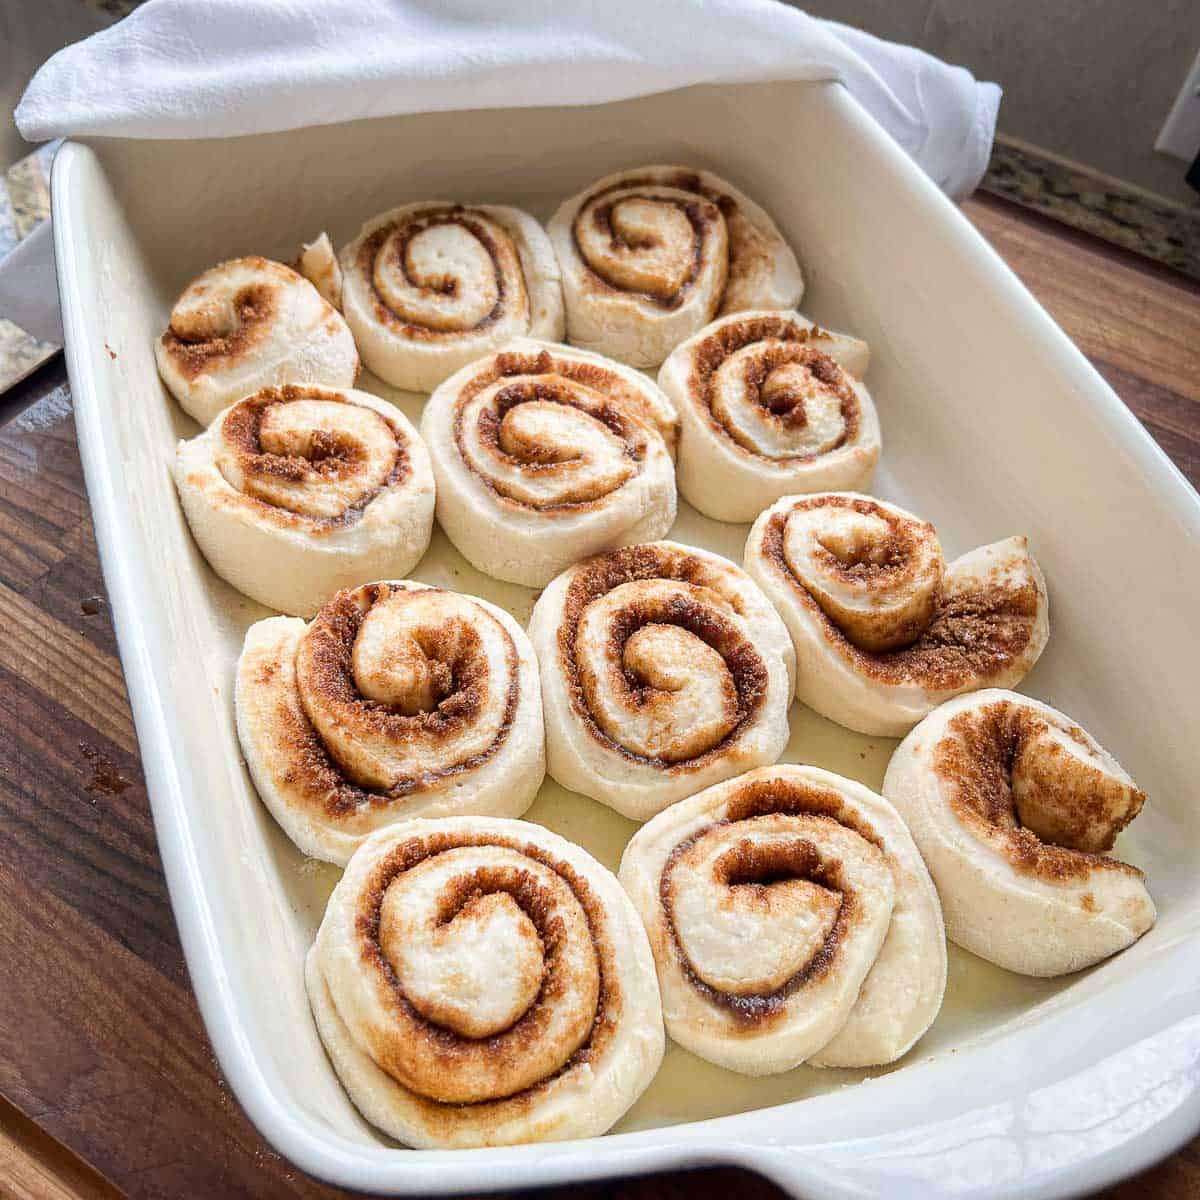 Risen cinnamon rolls in a baking dish.